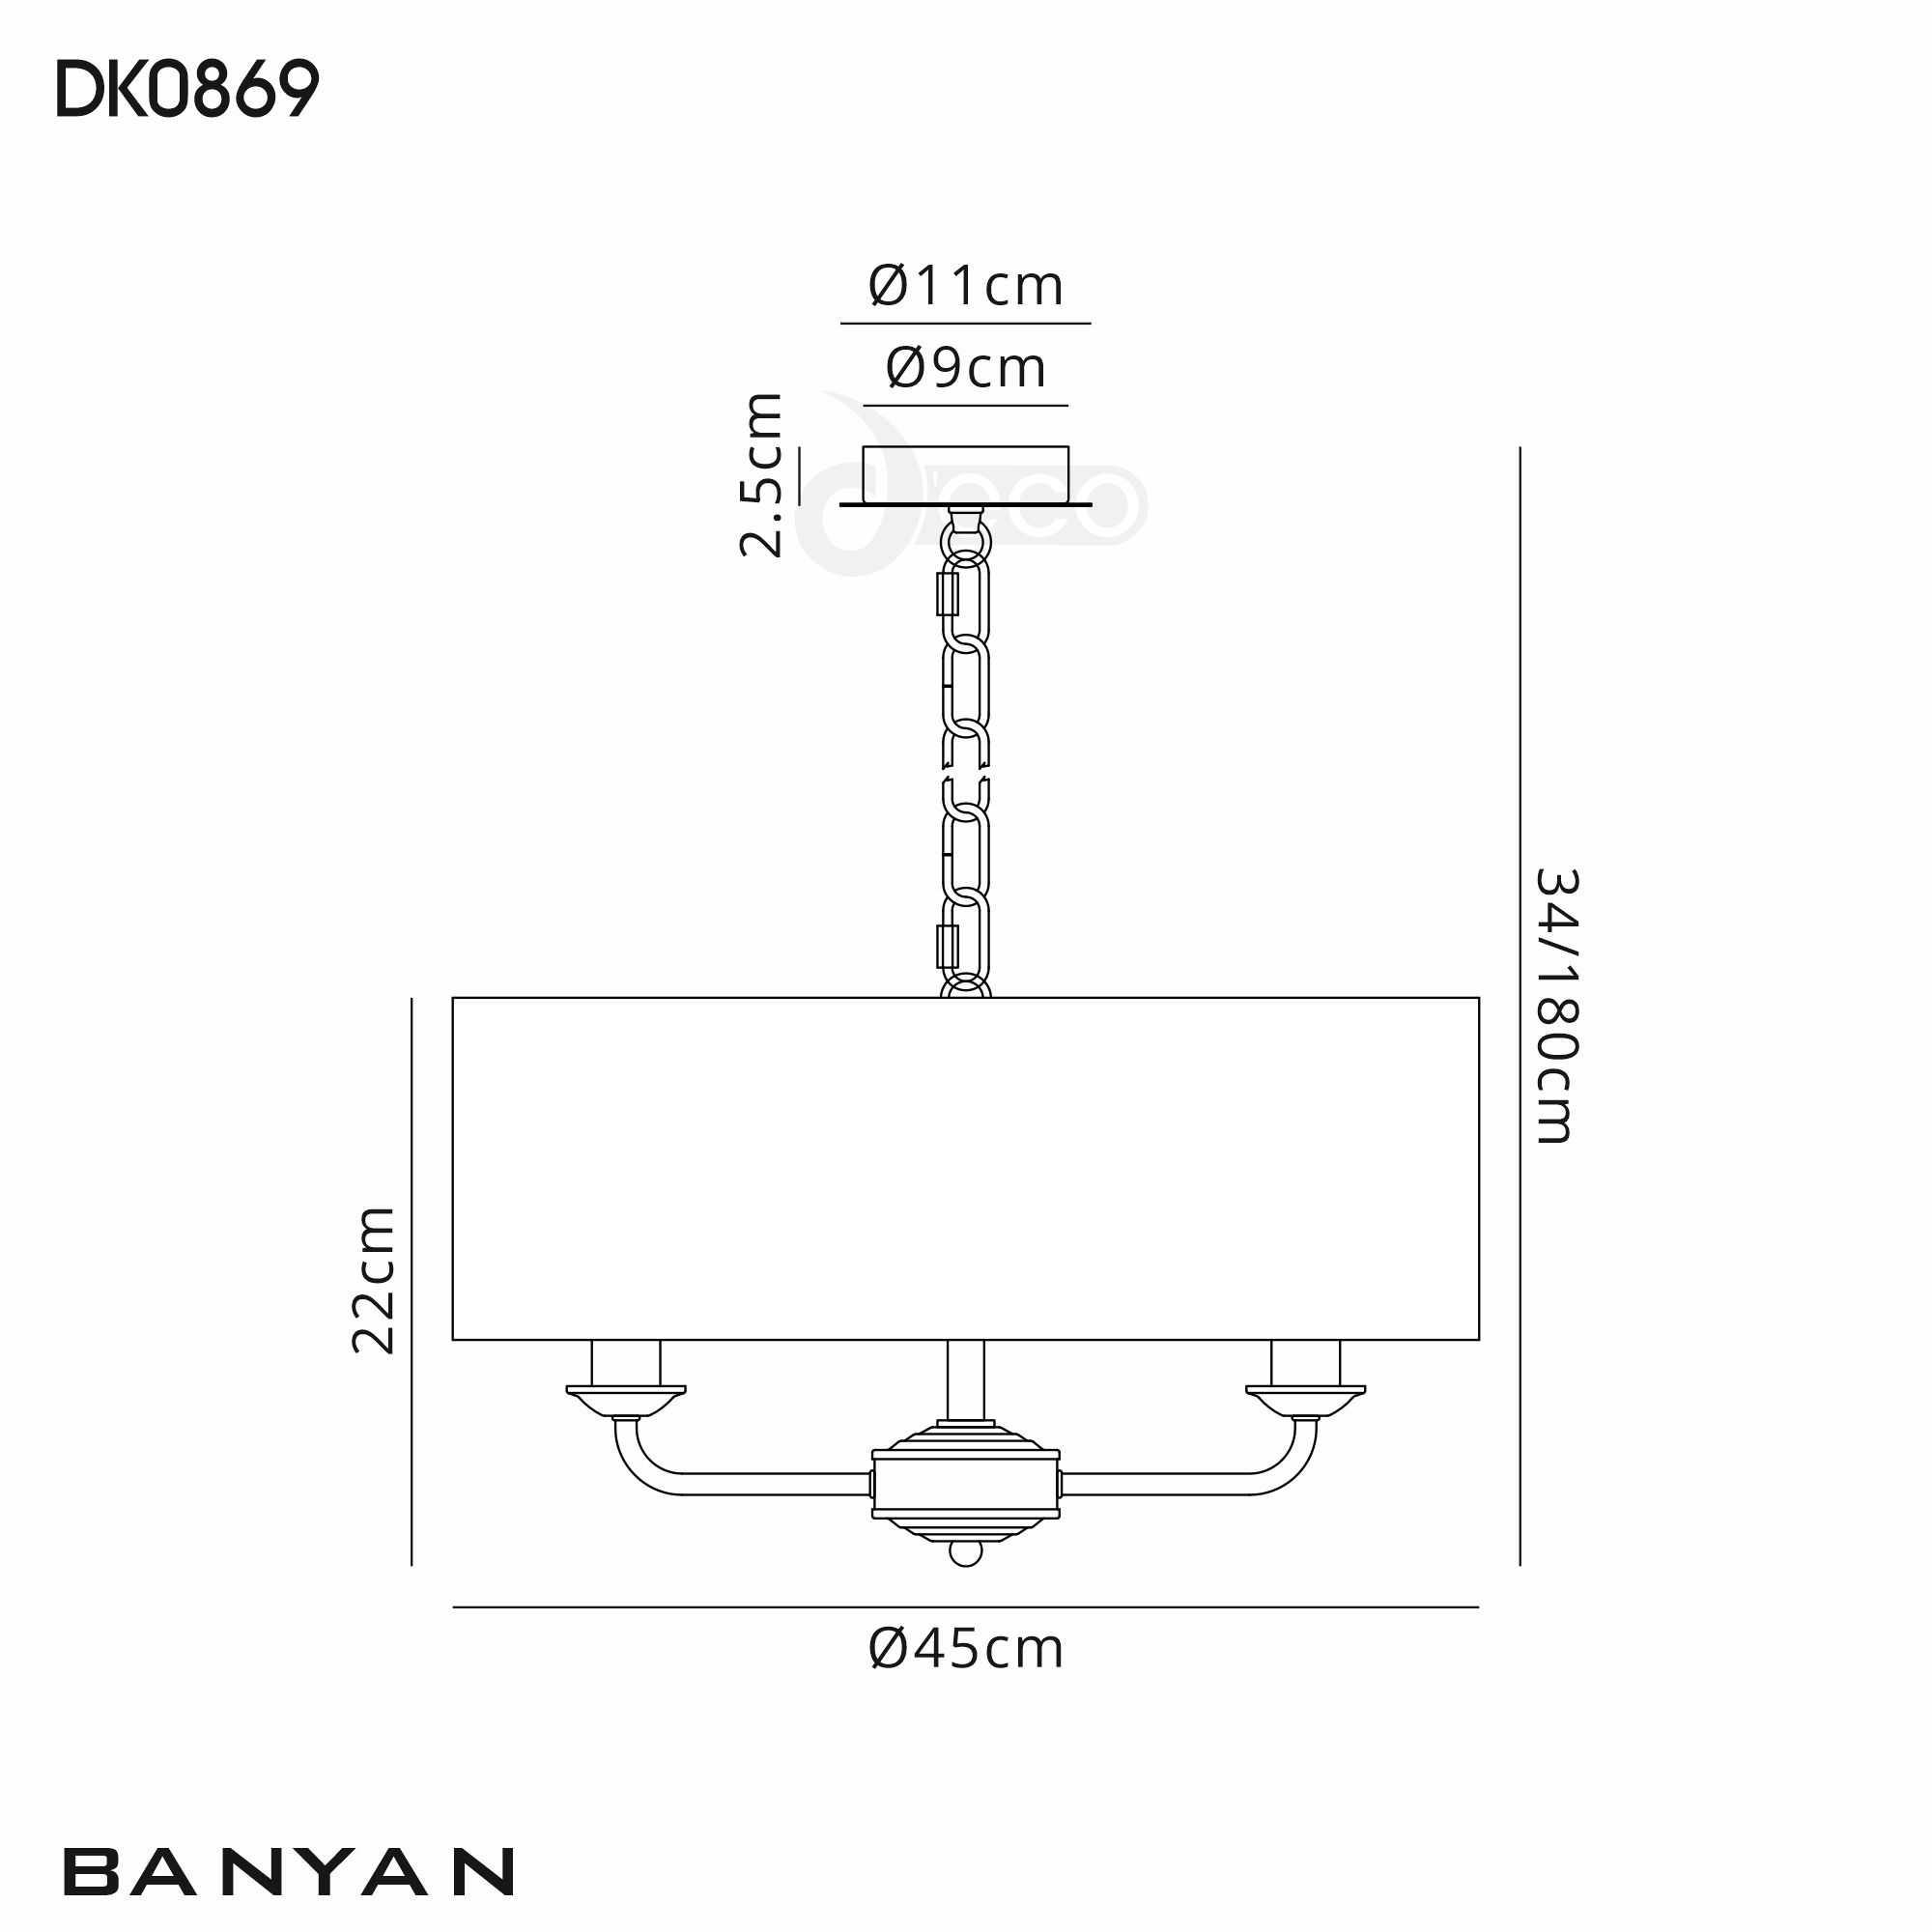 DK0869  Banyan 45cm 3 Light Pendant Antique Brass; Black